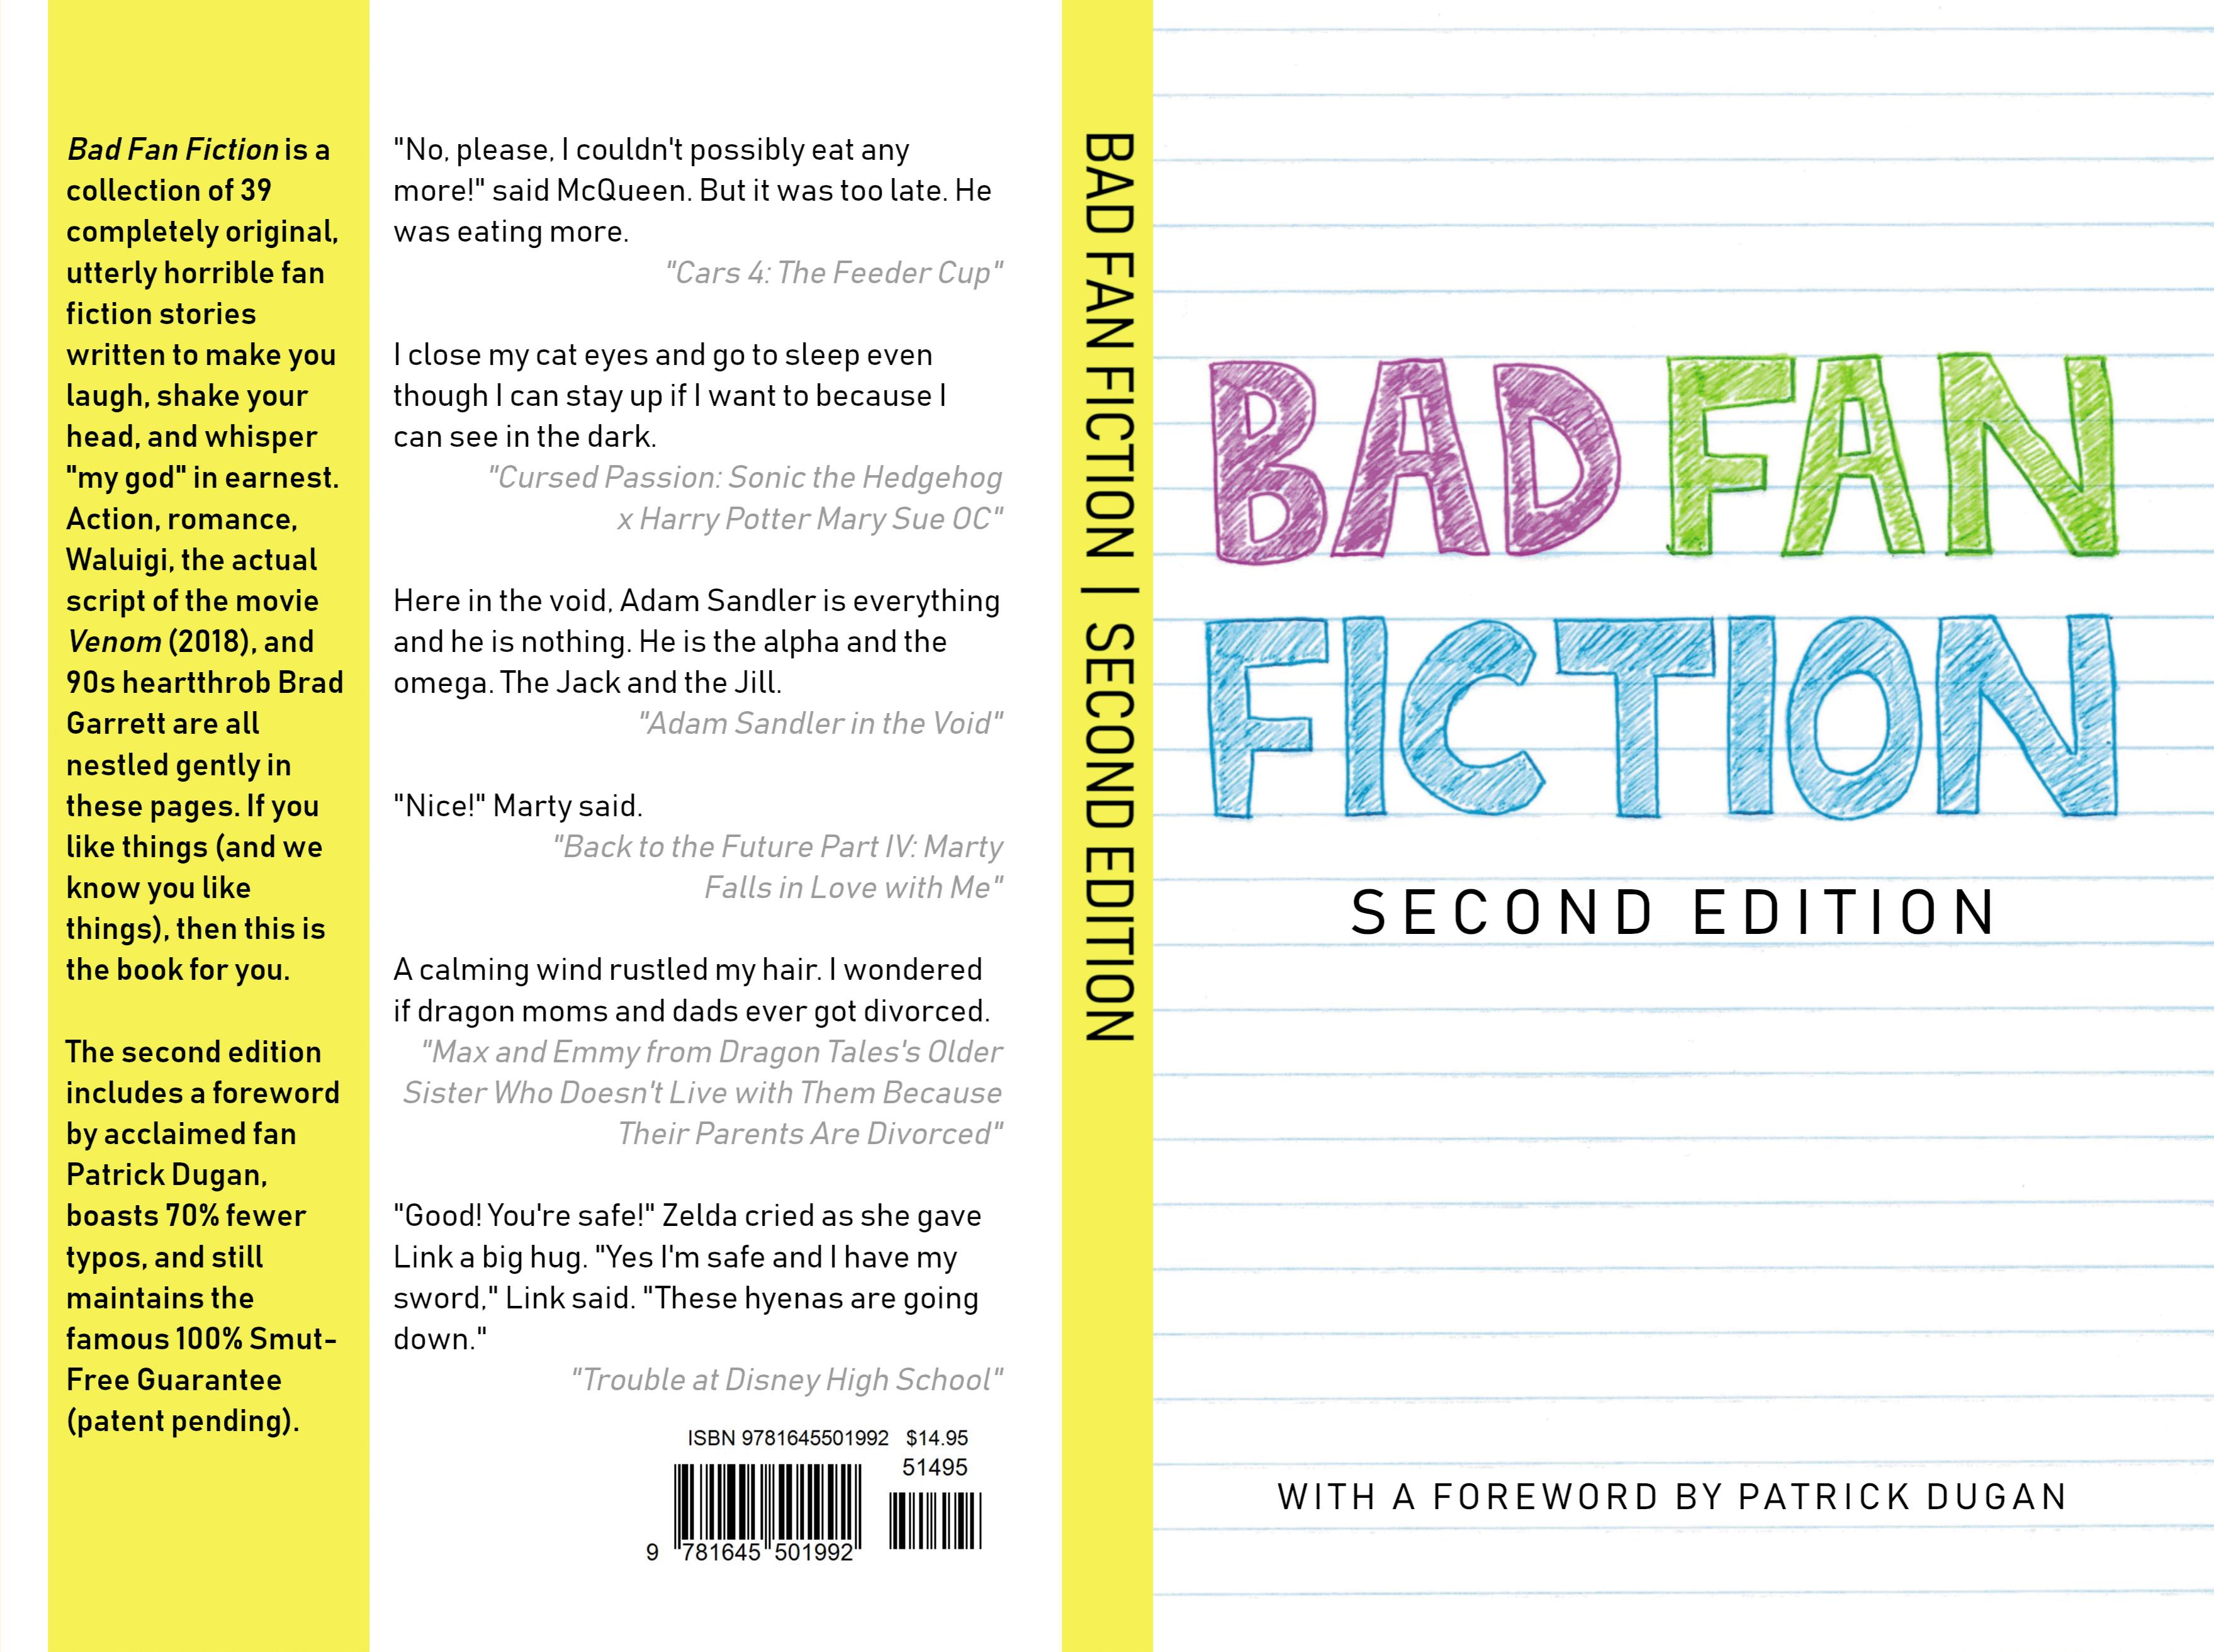 Bad Fan Fiction cover image